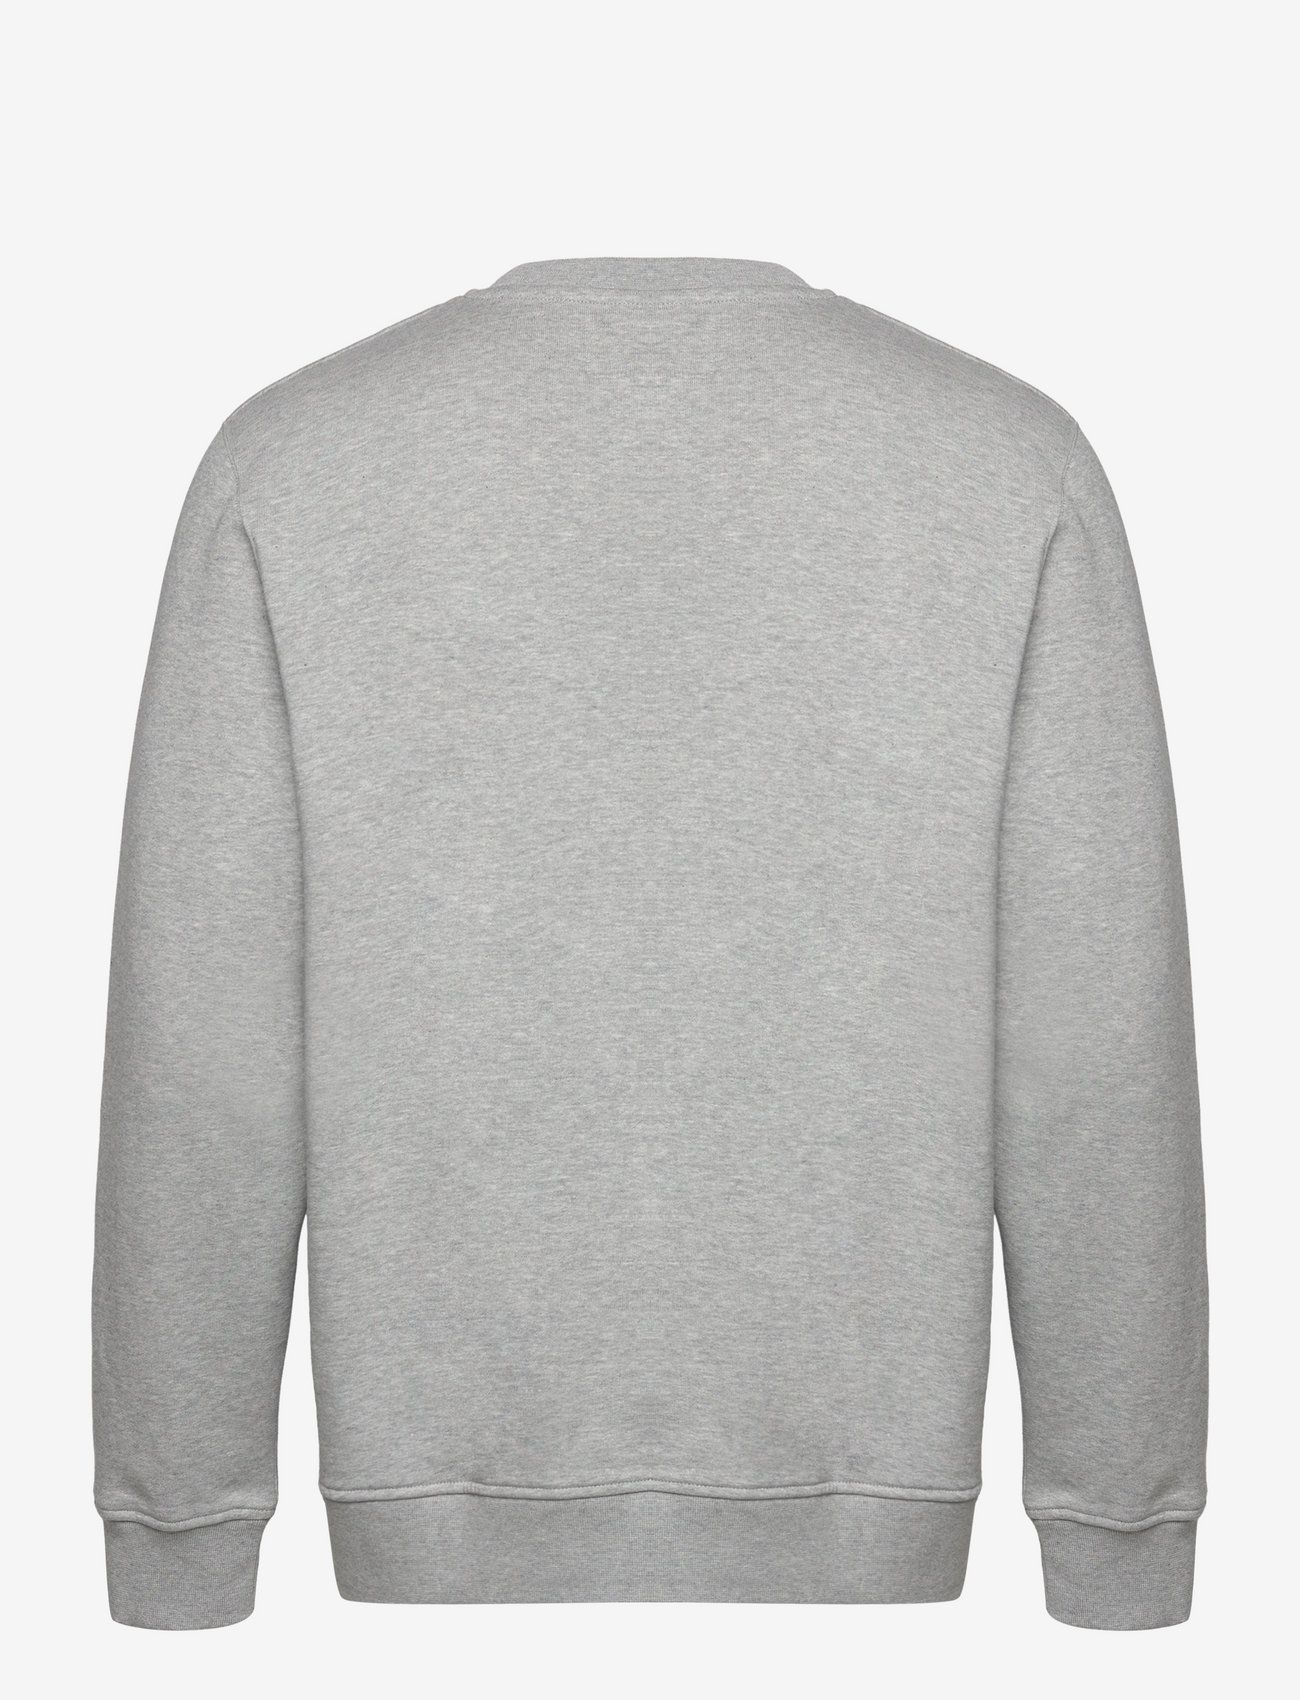 Double A by Wood Wood - Tye sweatshirt GOTS - svetarit - grey melange - 1